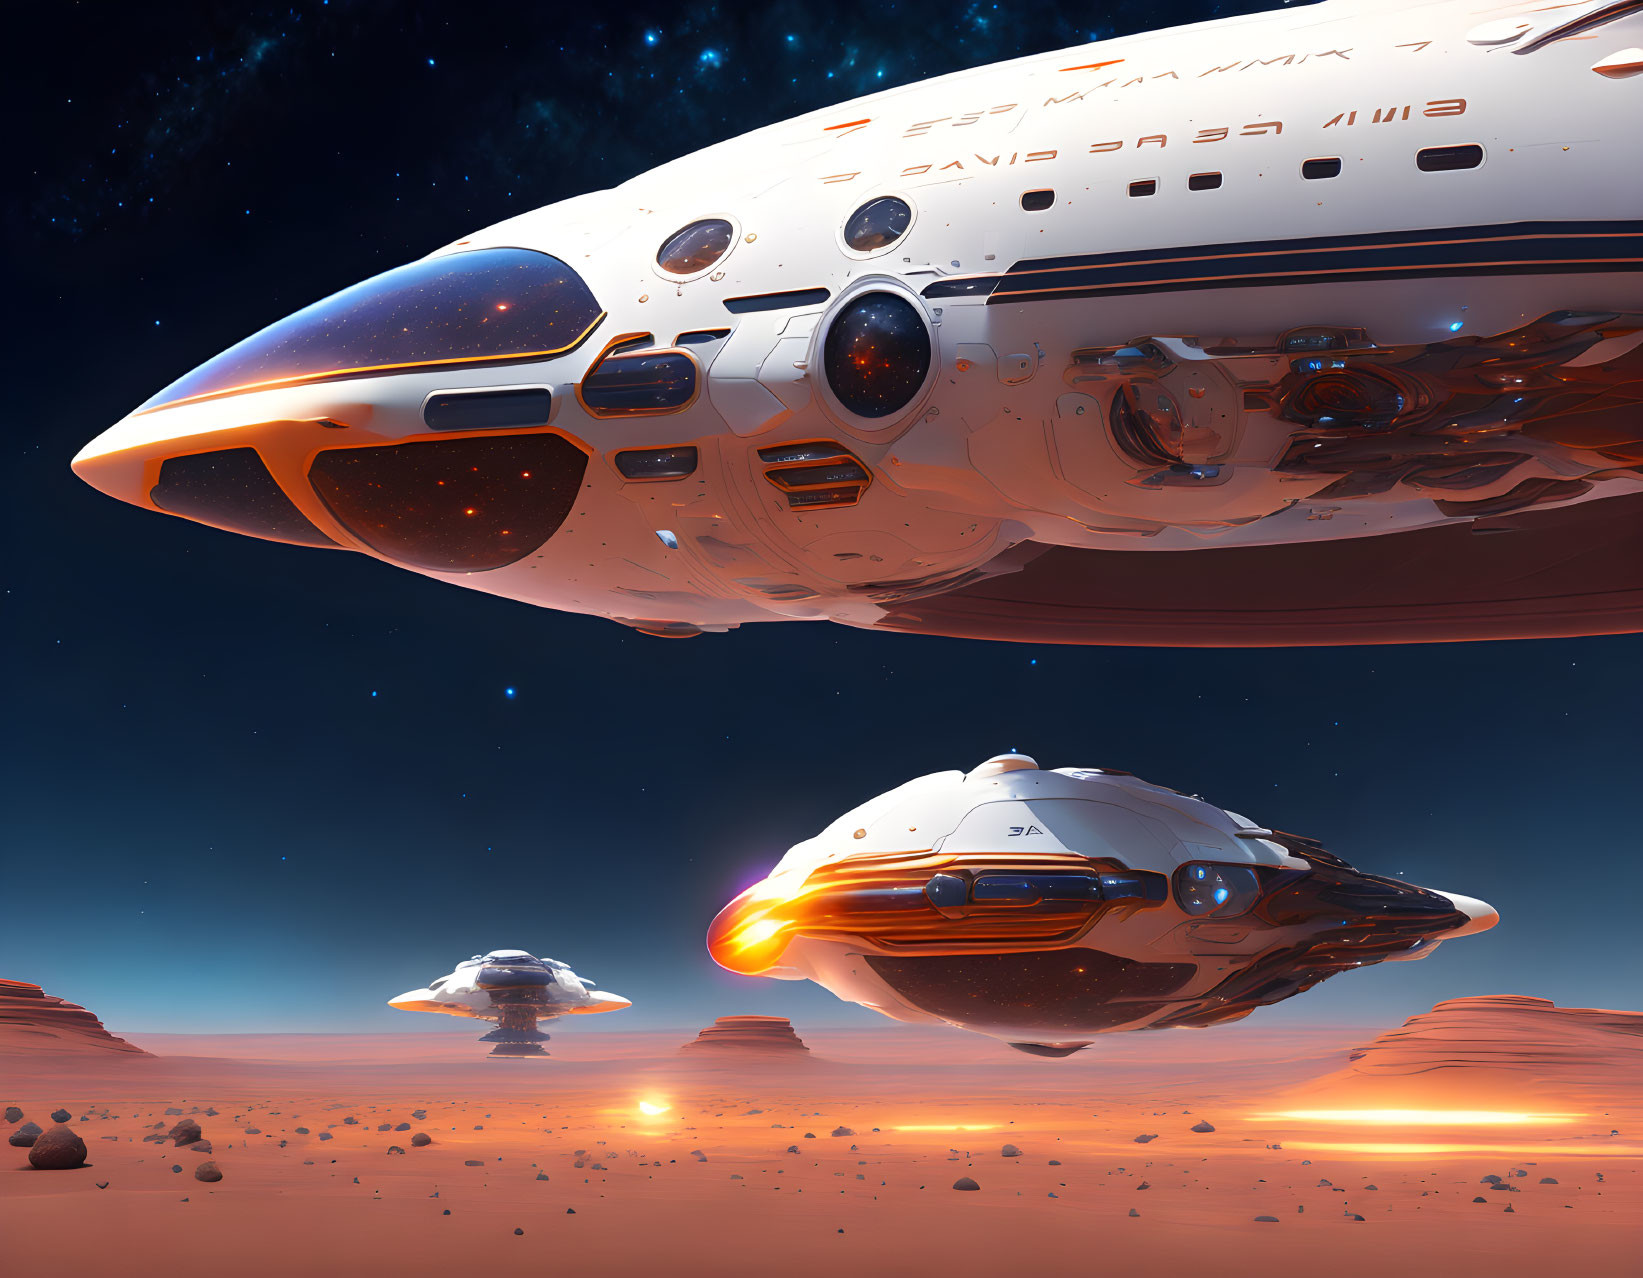 Futuristic spaceships over desert landscape at twilight